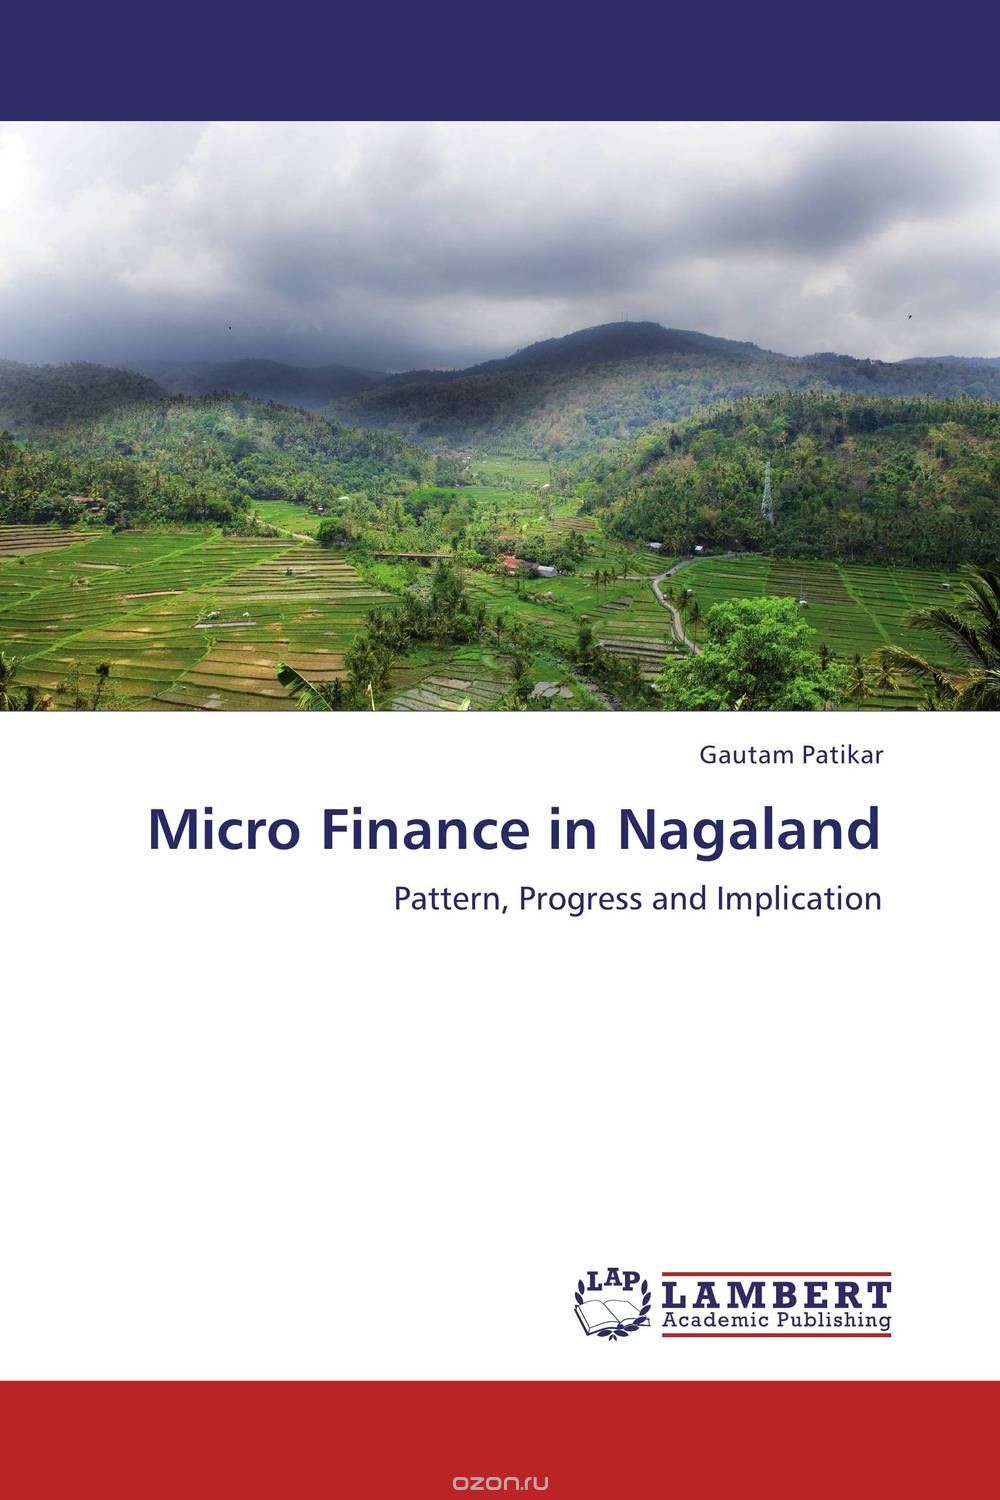 Скачать книгу "Micro Finance in Nagaland"